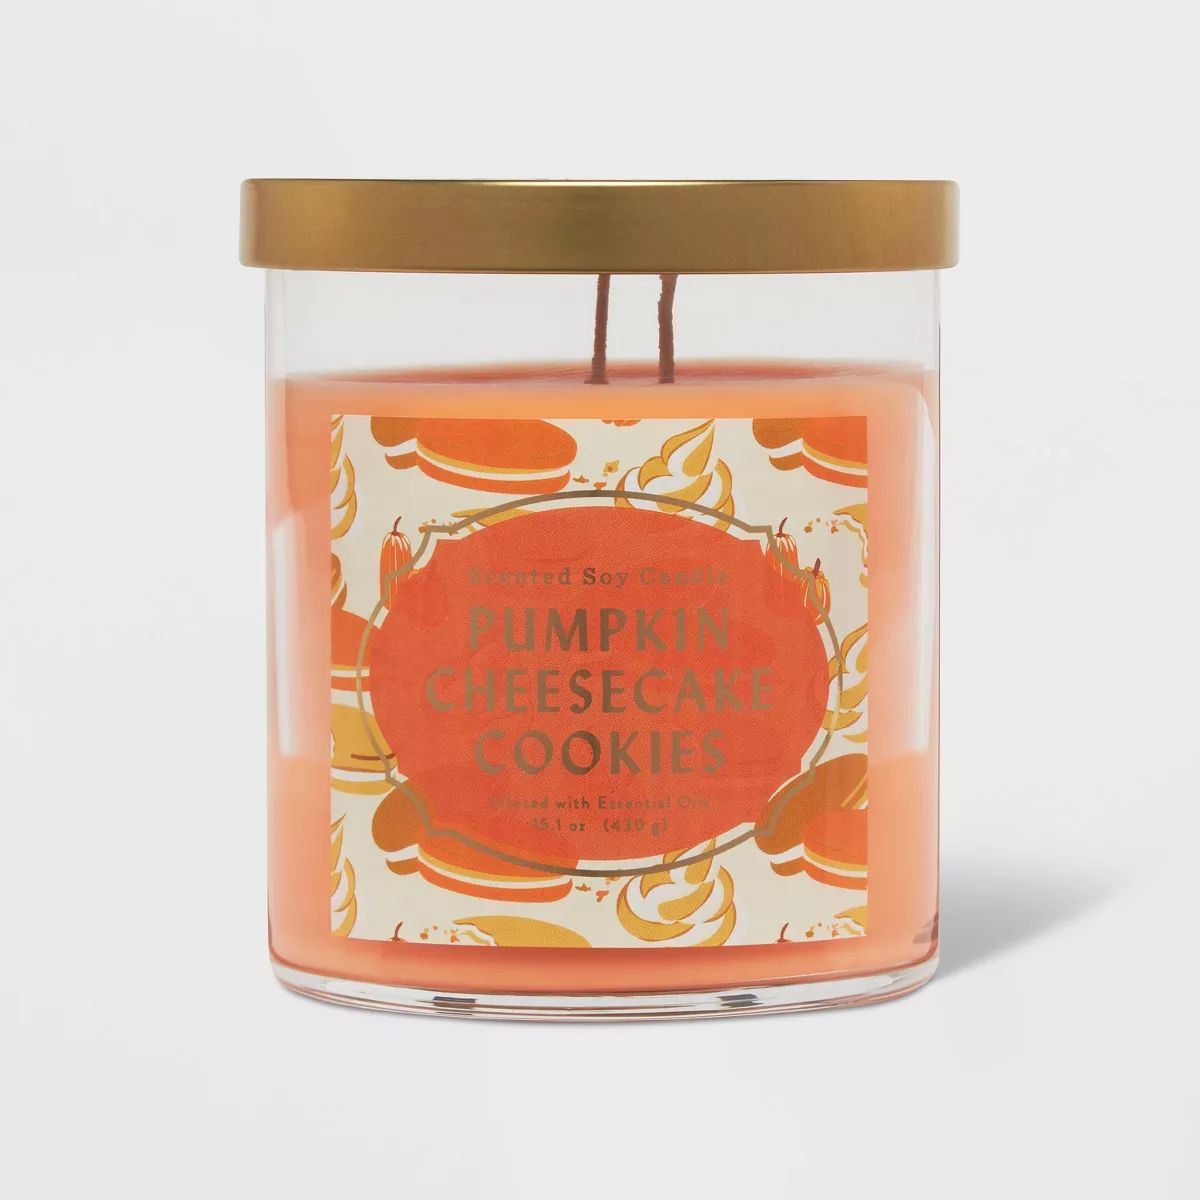 15.1oz Pumpkin Cheesecake Cookie Jar Candle Orange - Opalhouse™ | Target